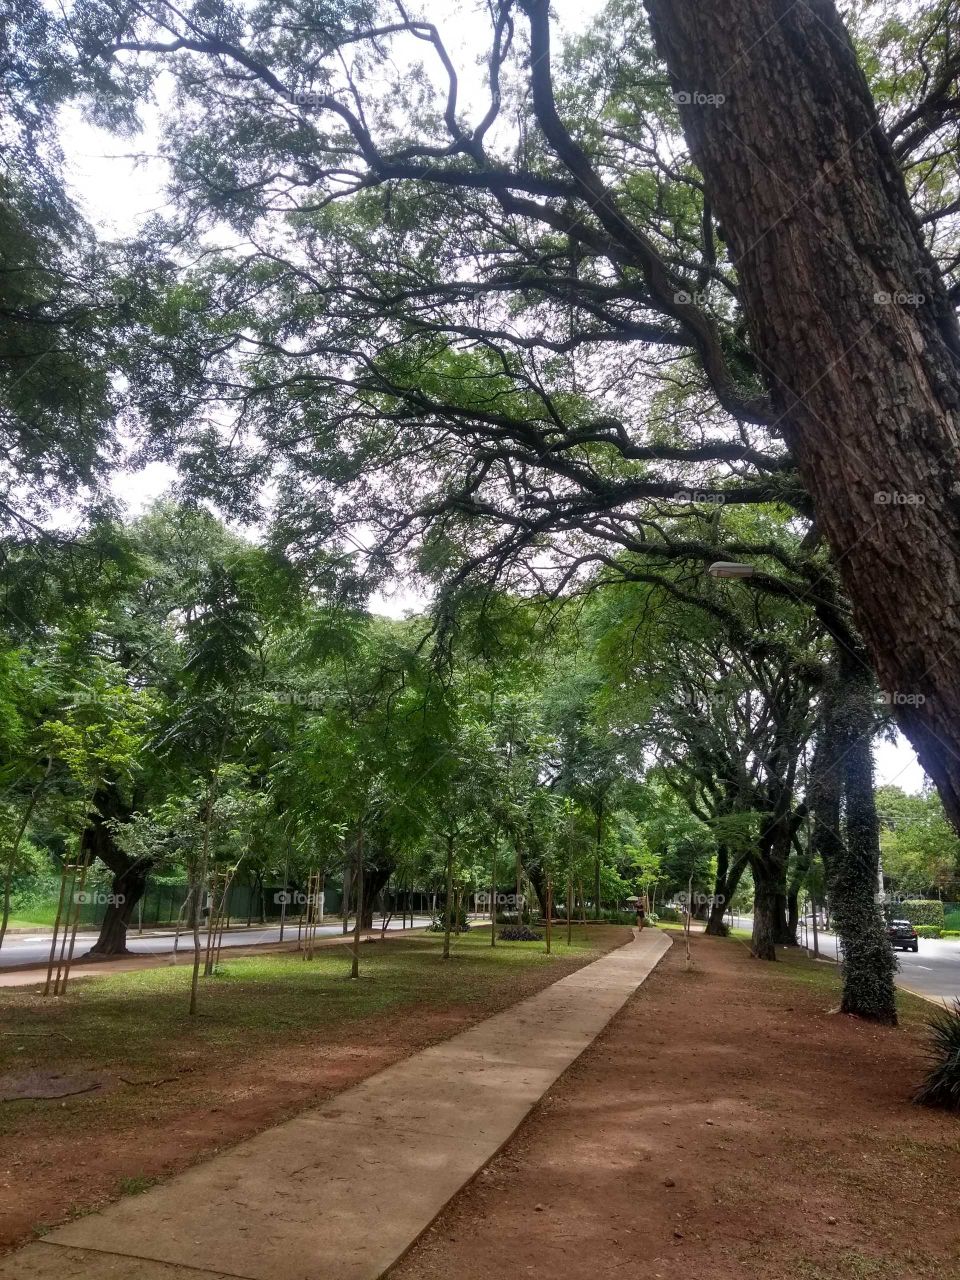 Path between the trees - Caminho entre as árvores